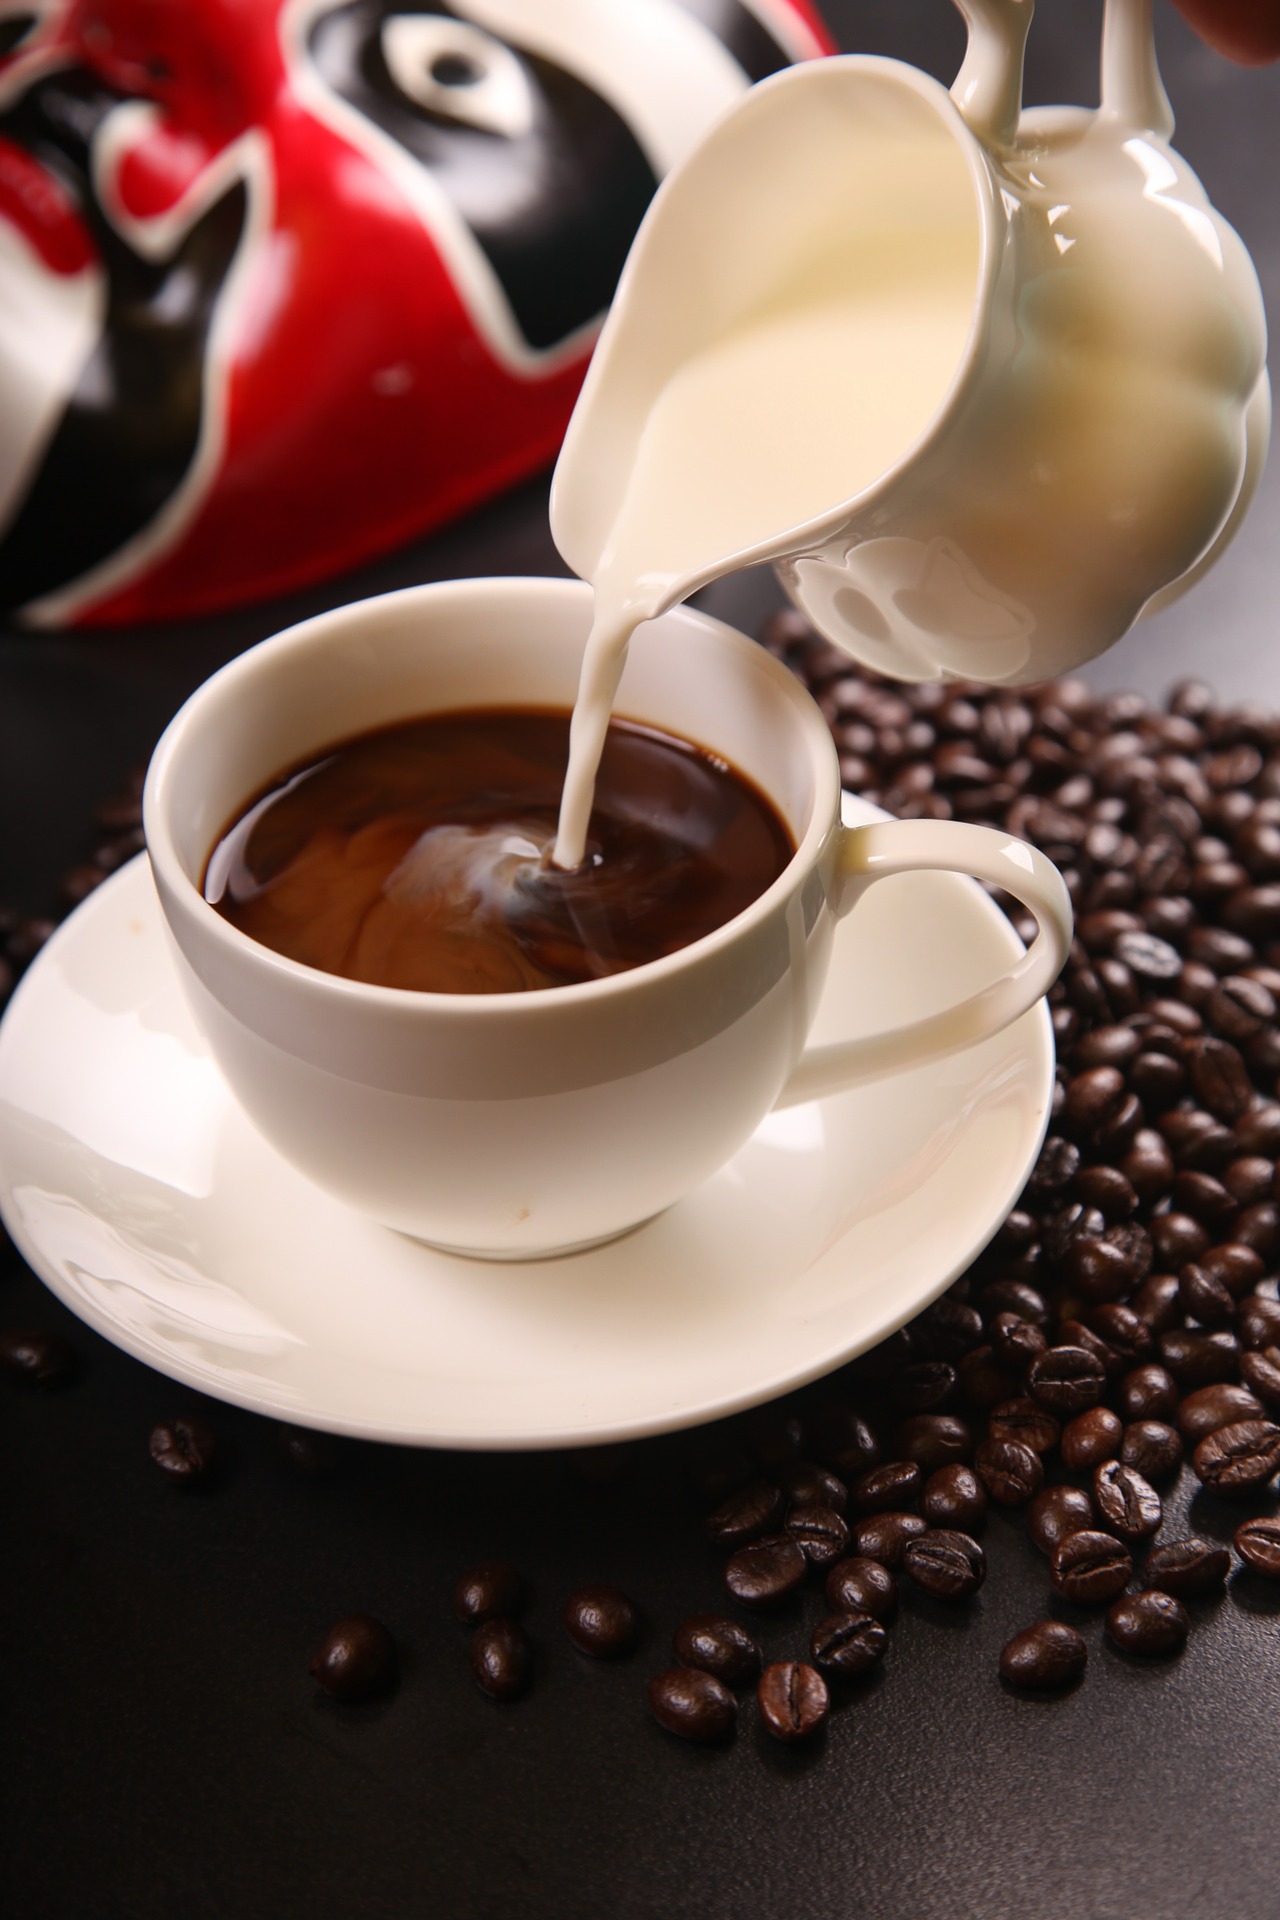 高咖啡摄入量可能与<font color="red">低</font>前列腺癌风险有关